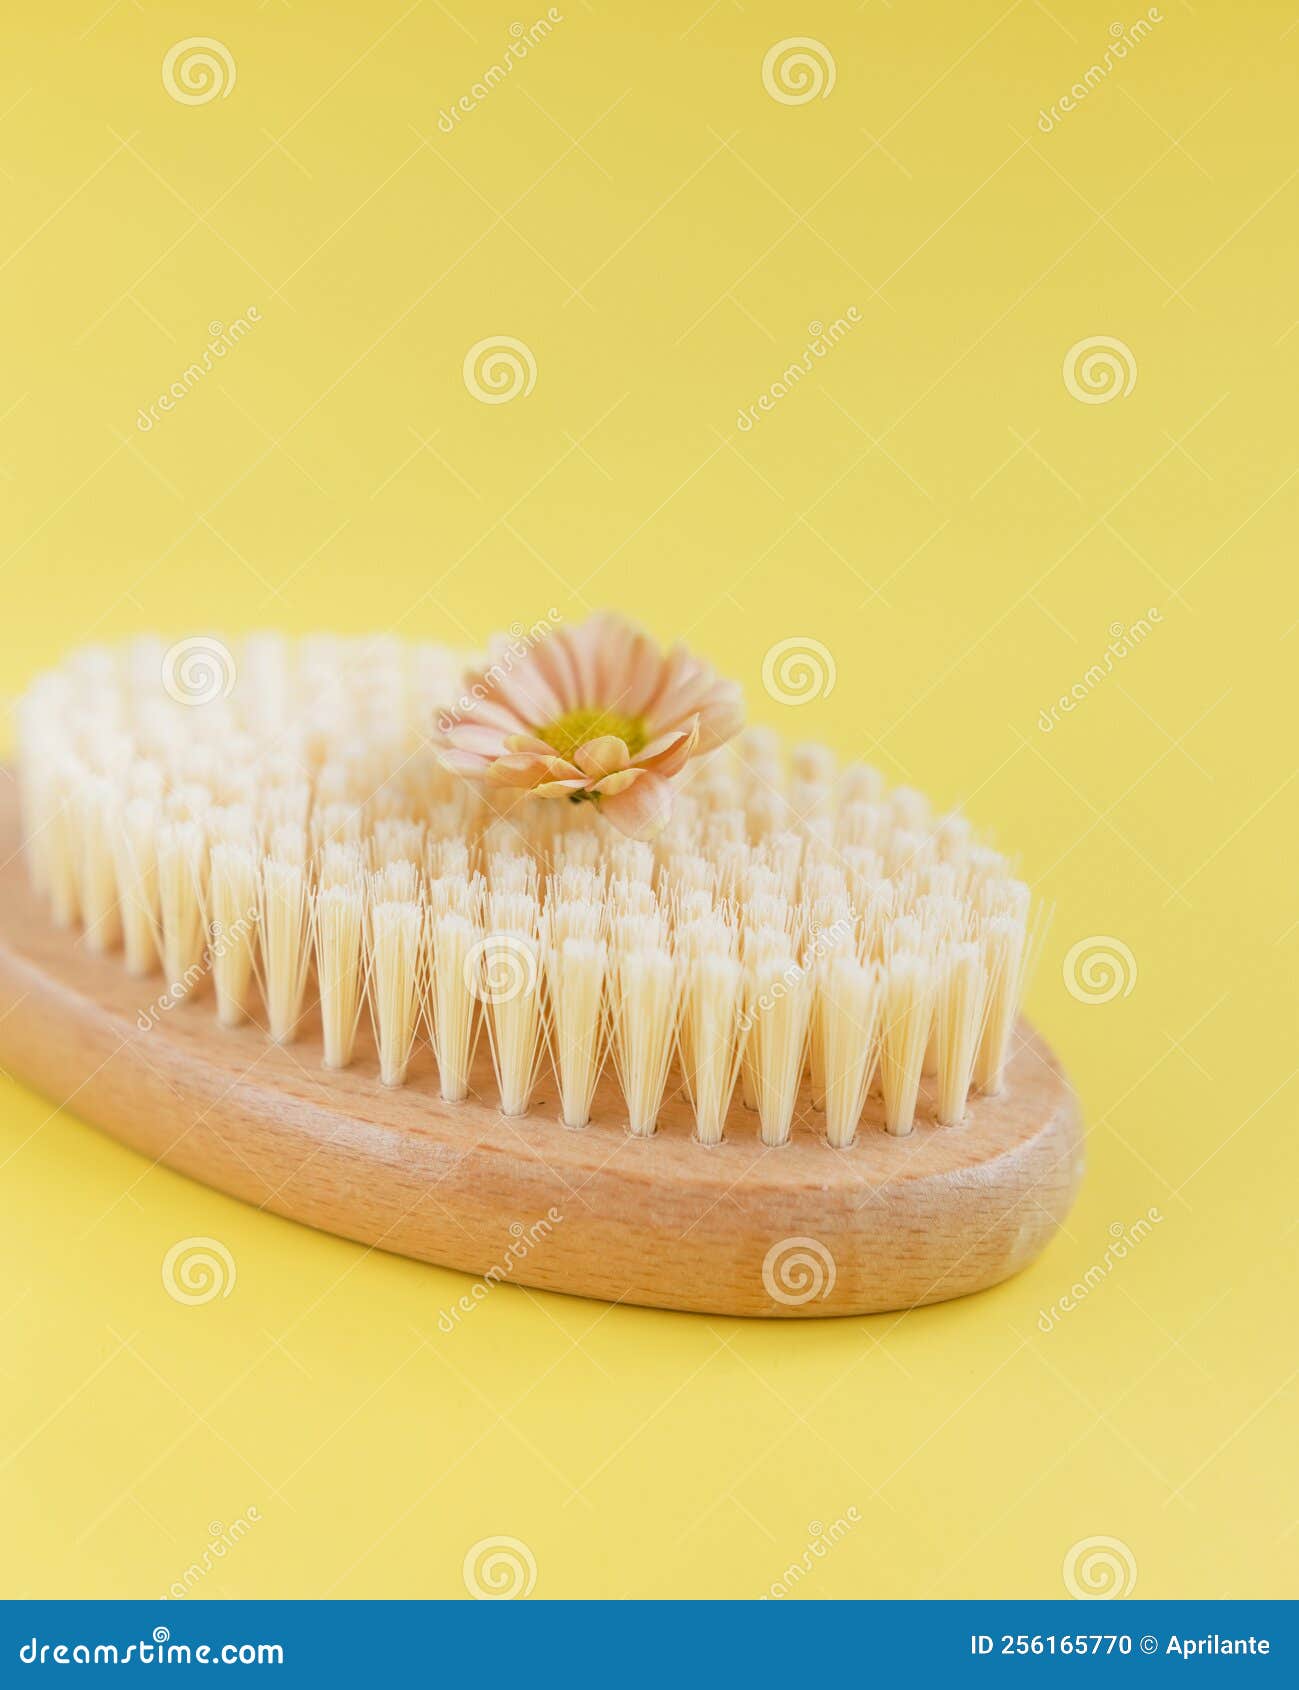 hair brush, anti-cellulite brush with flower